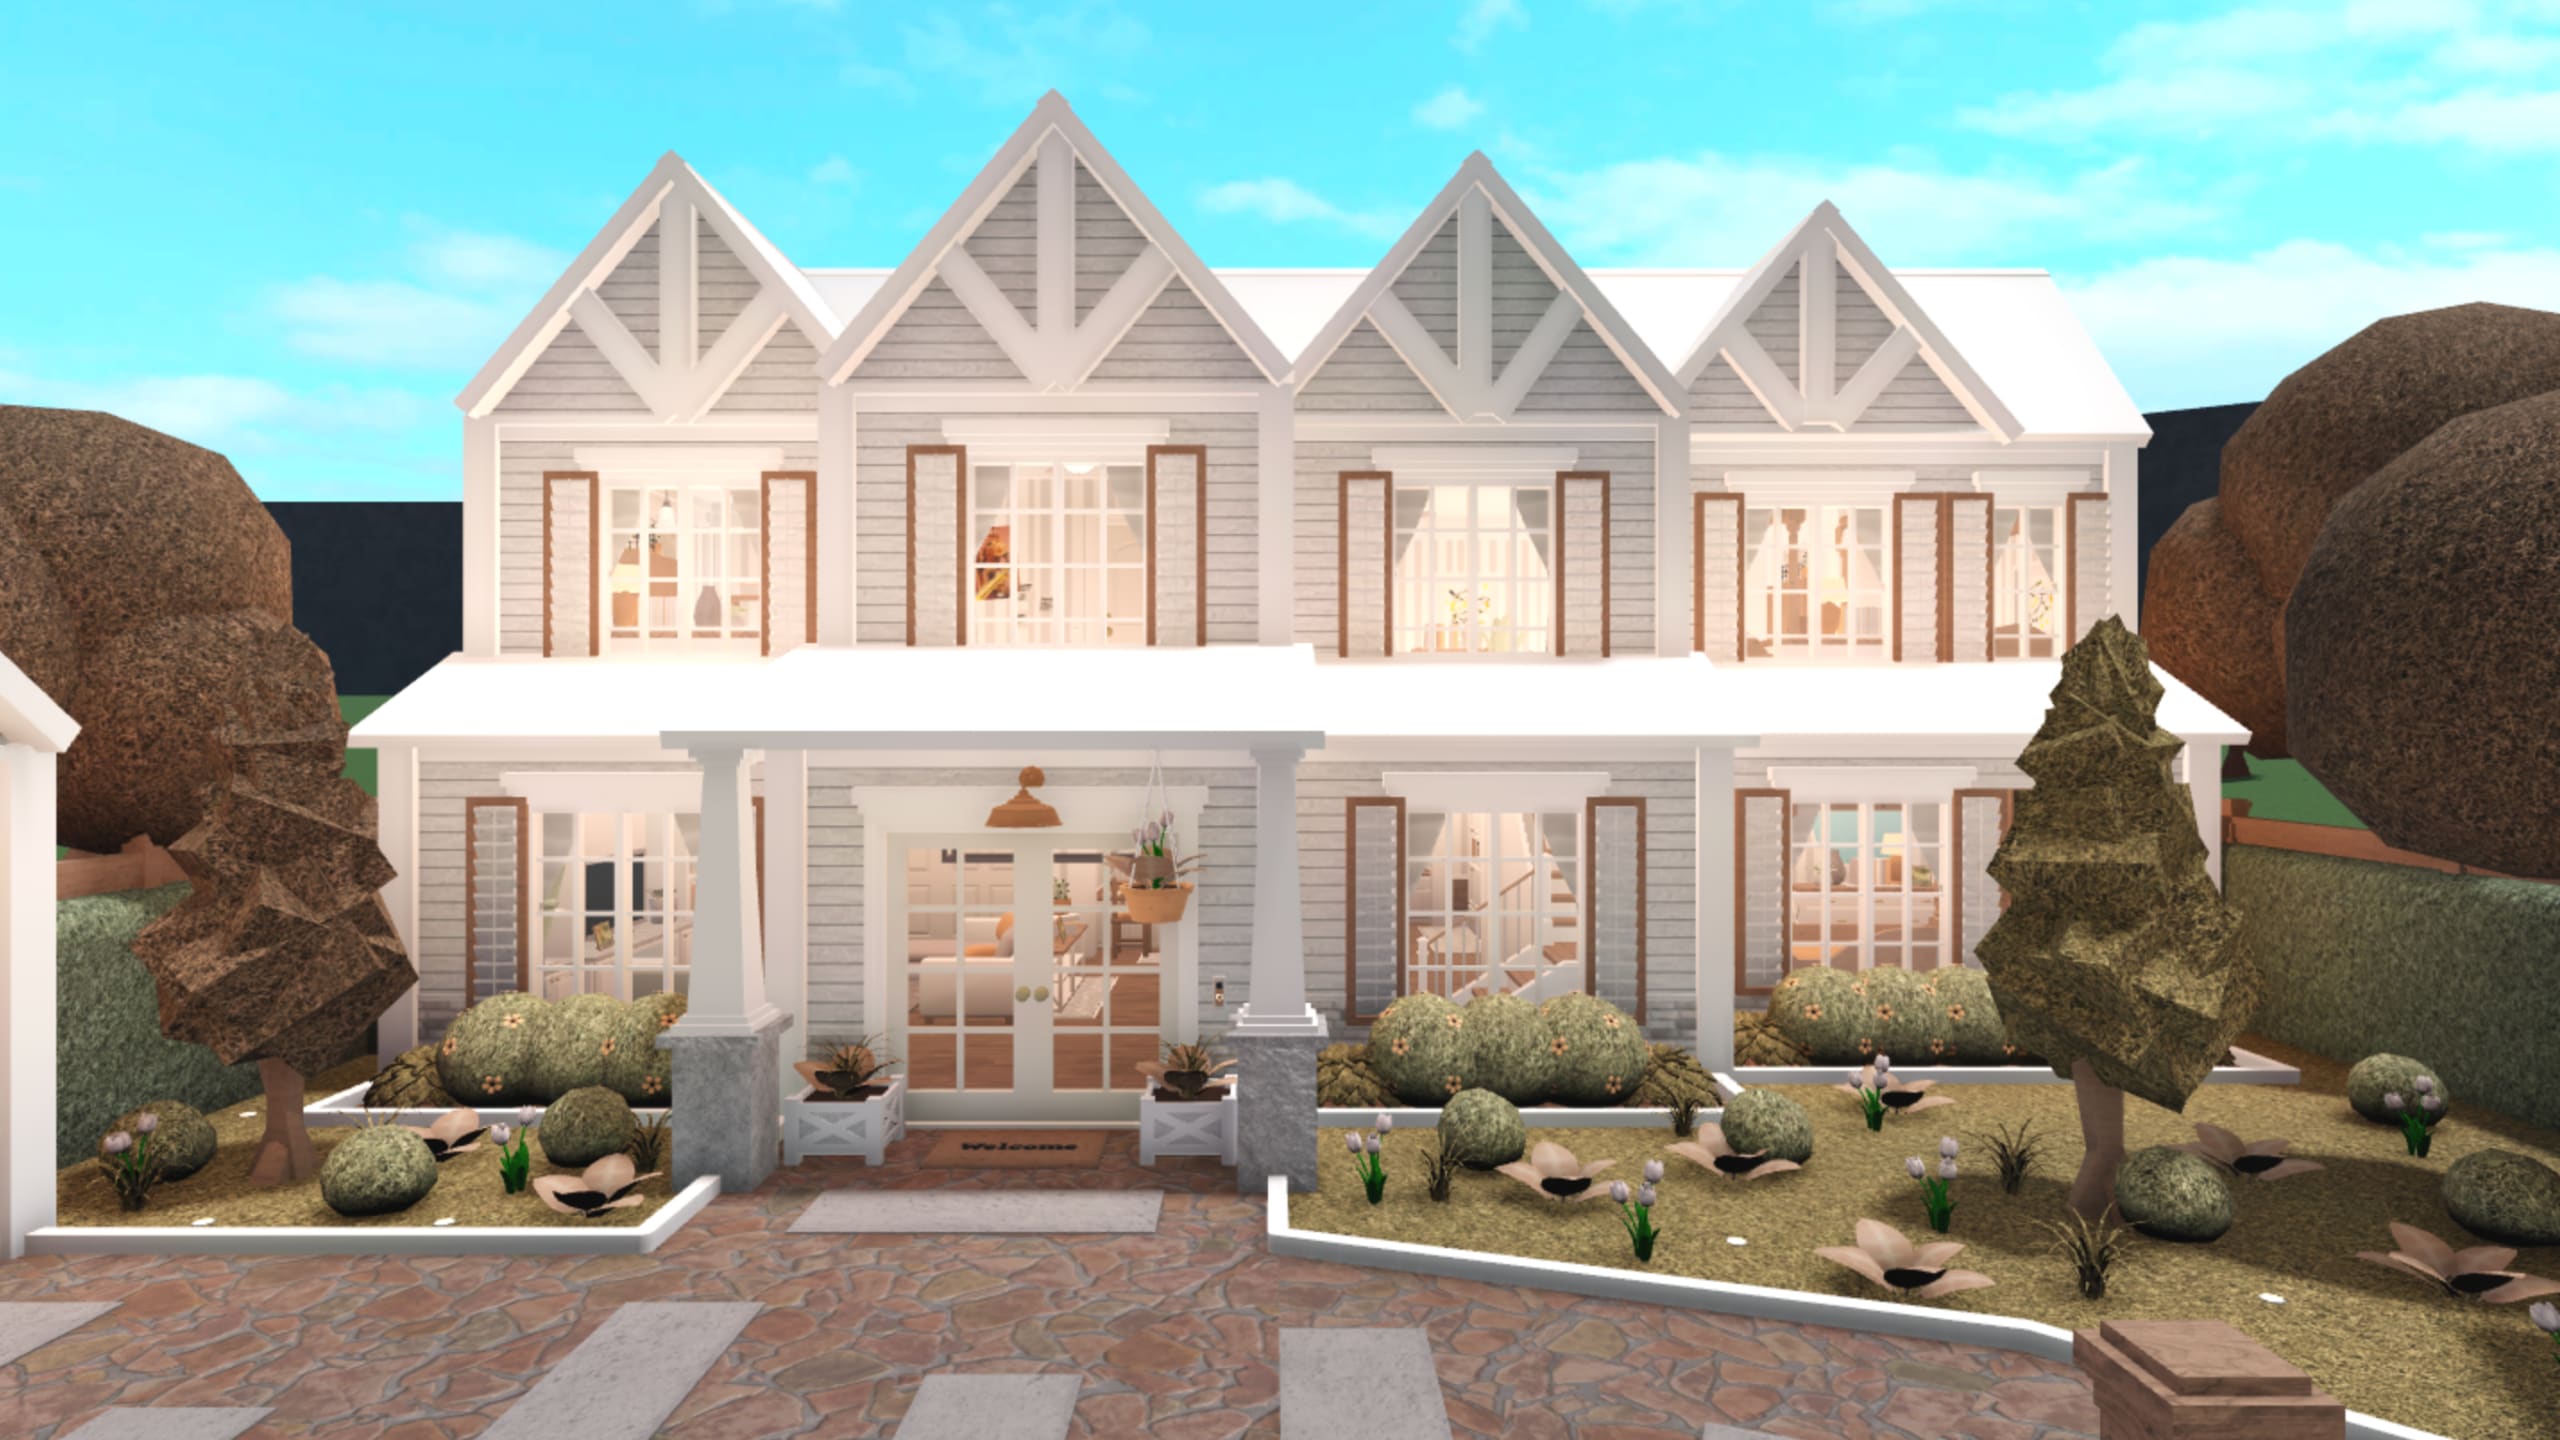 Bloxburg House Ideas: An Amazing Home Designs for You : r/Bloxburg